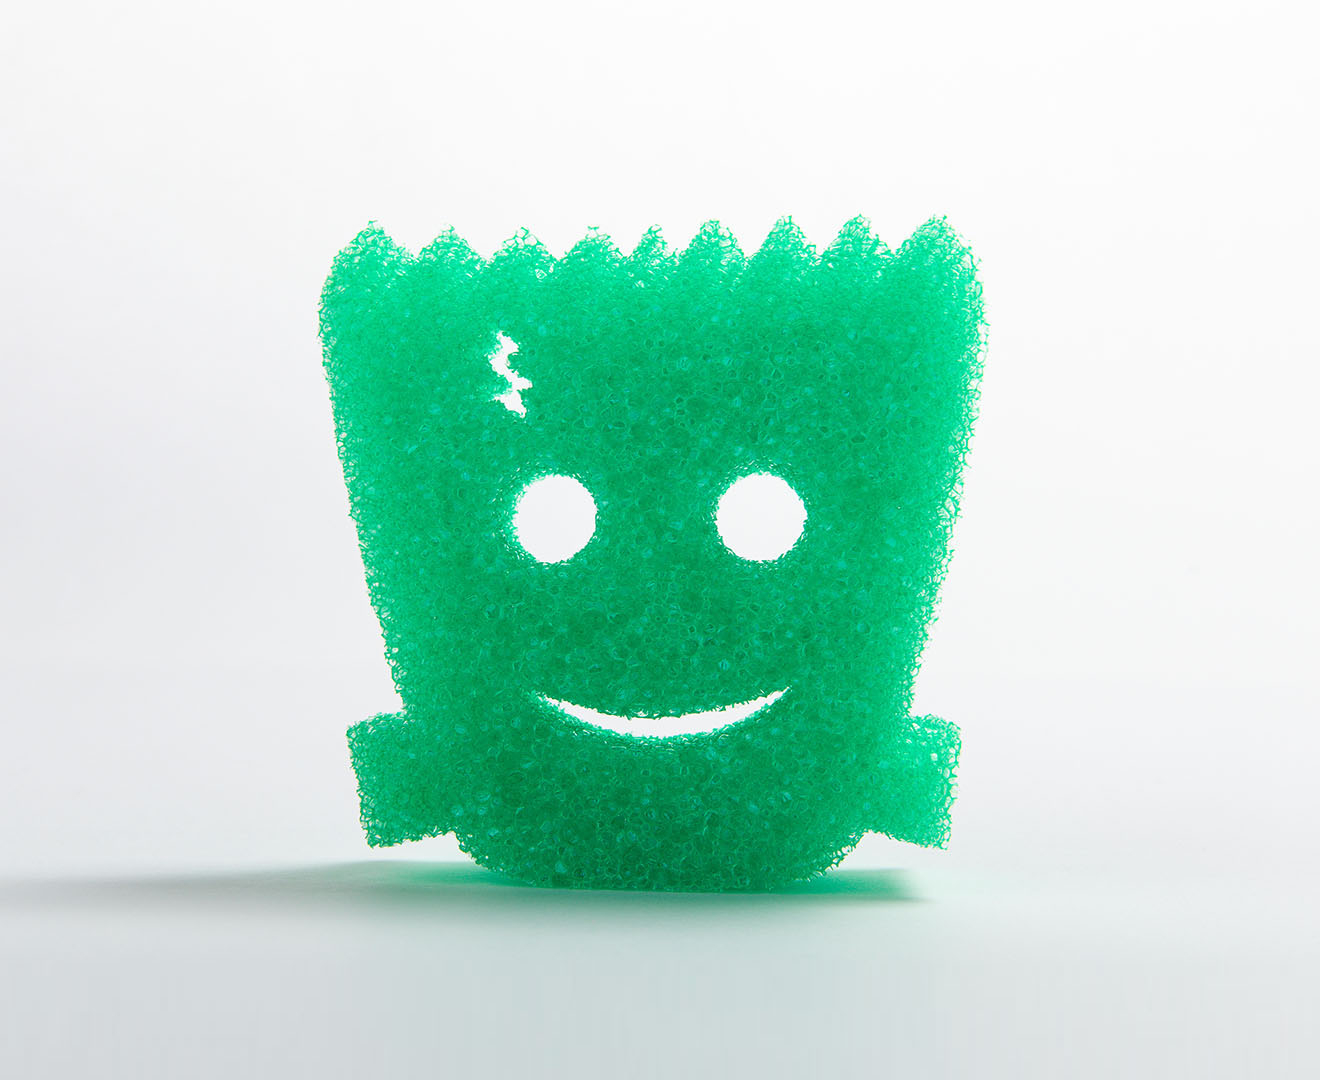 Scrub Daddy Sponge Halloween Shapes, Green Monster, 1count box sponge 